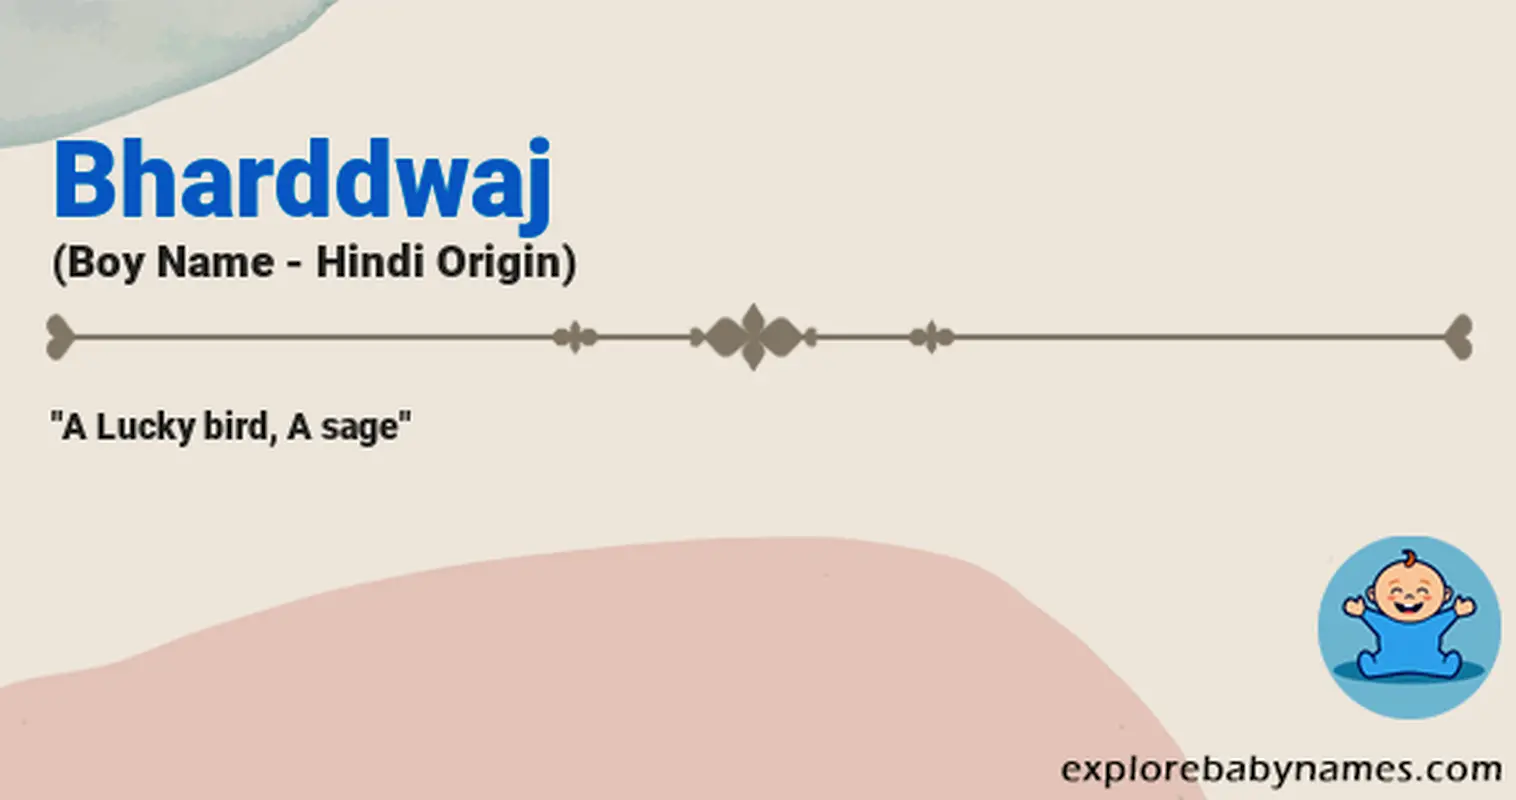 Meaning of Bharddwaj